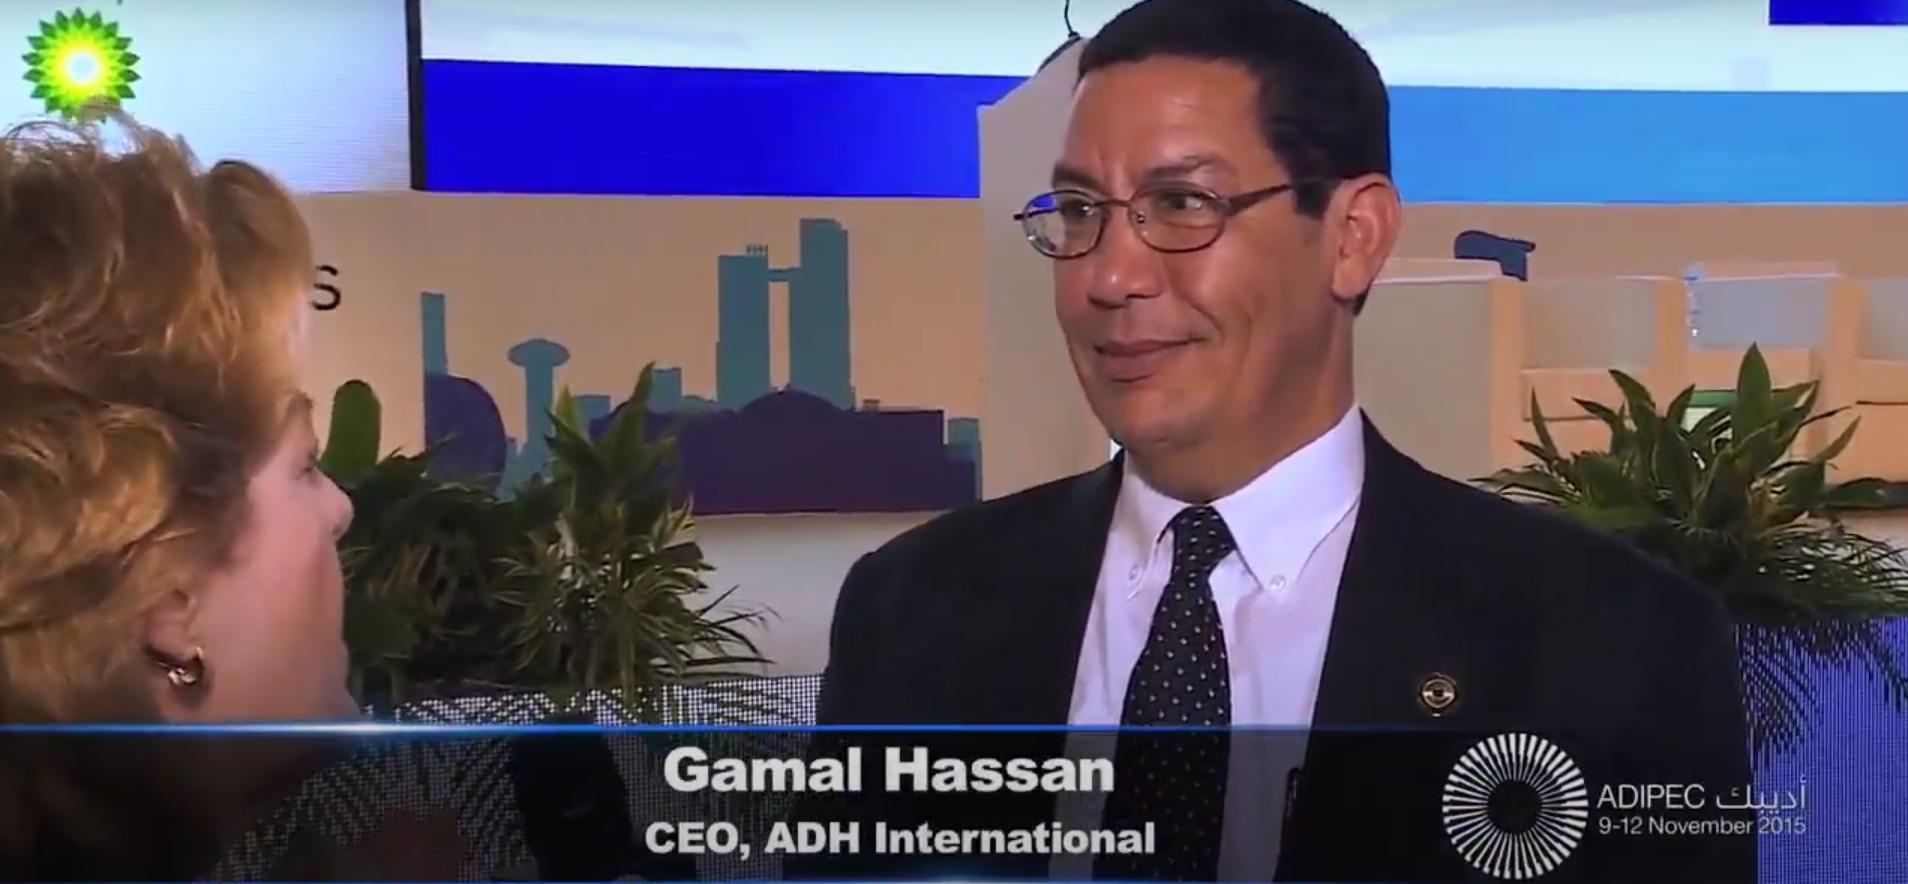 Gamal Hassan, CEO - ADH International